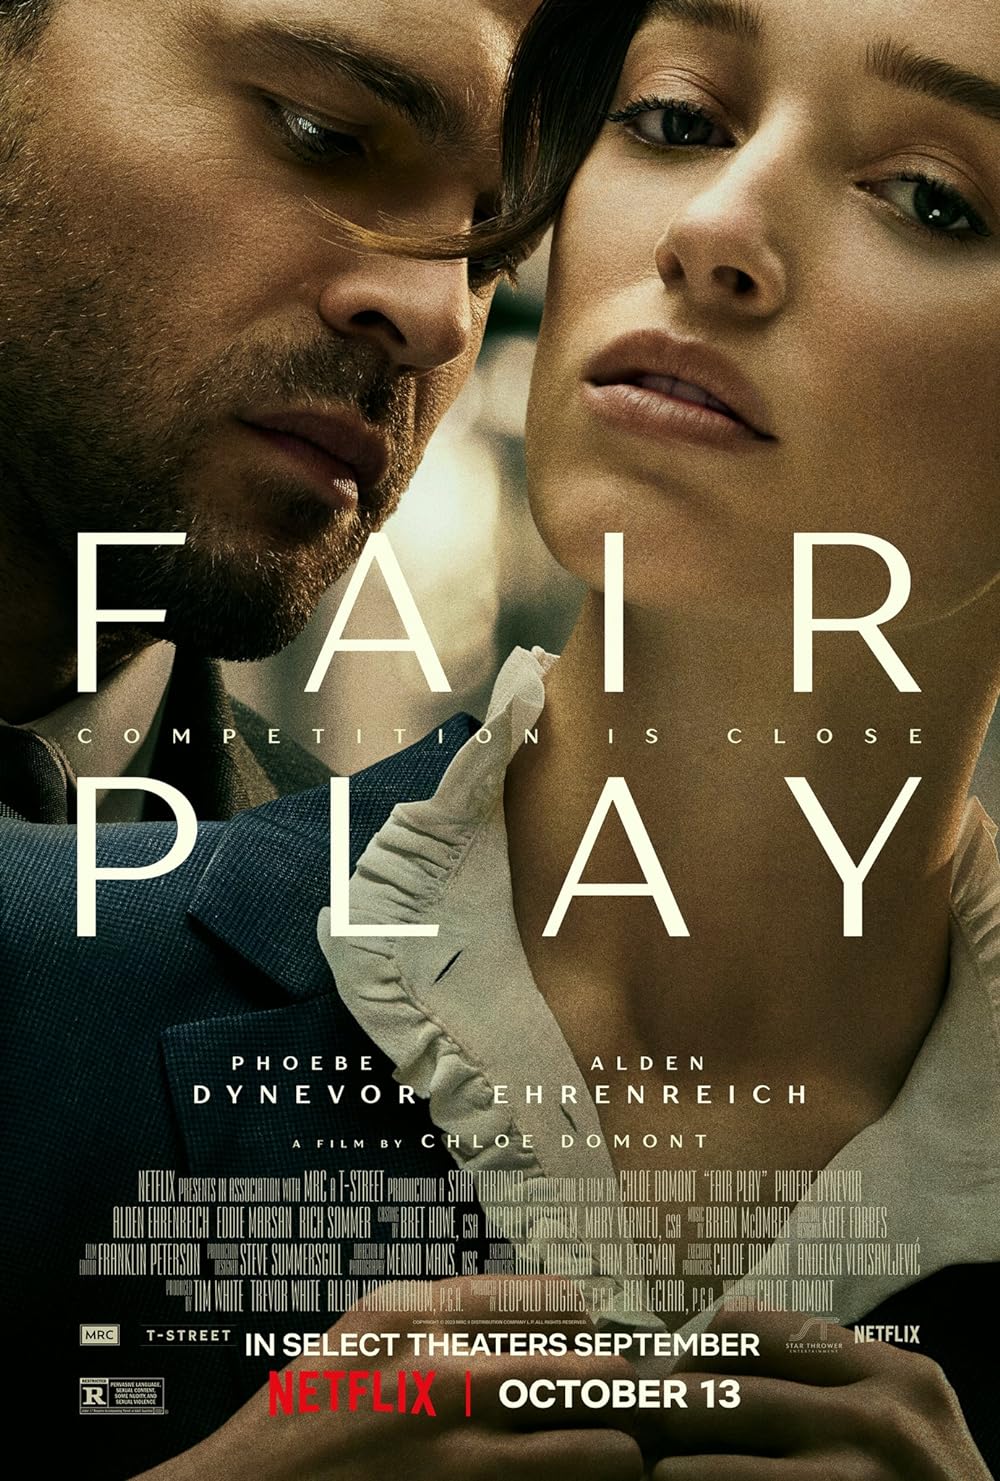 Fair Play (October 6) - Streaming on NetflixStreaming on Netflix from October 6, 